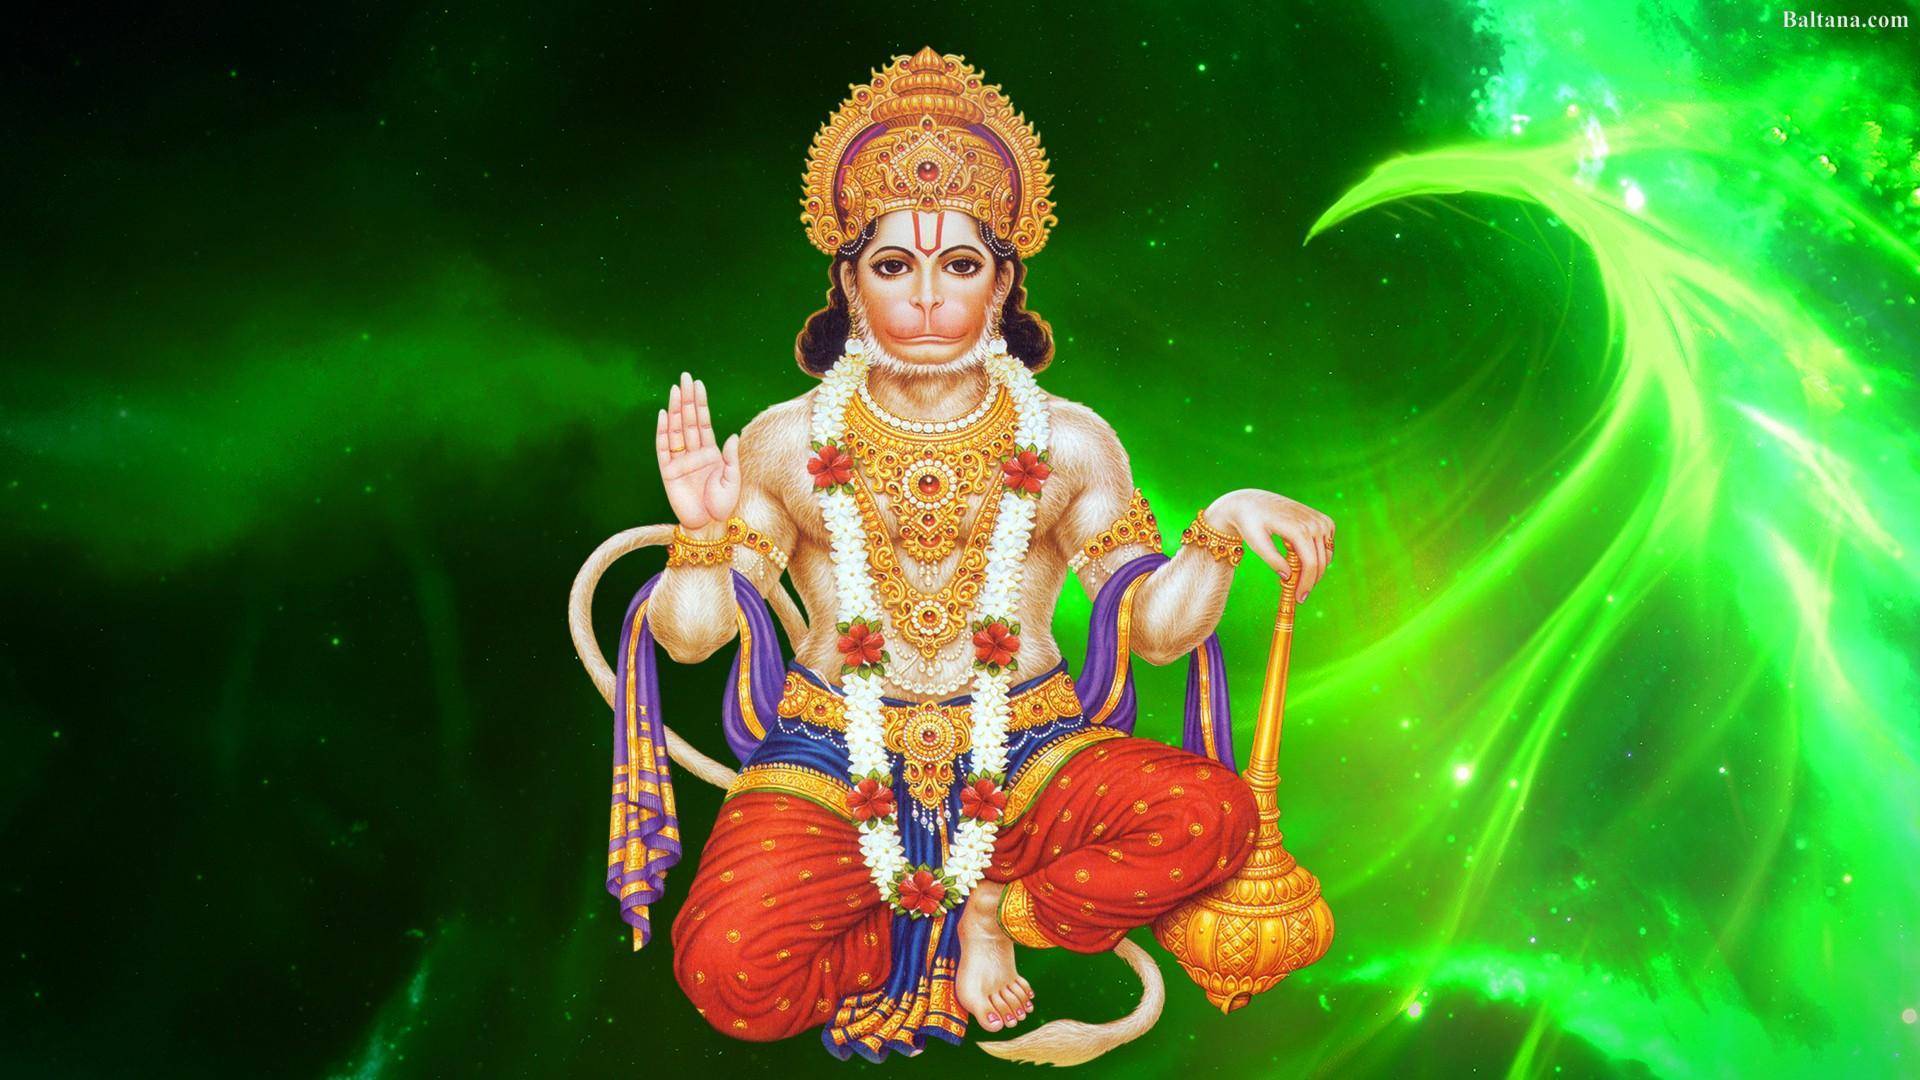 Бог хануман - индийский бог силы, герой рамаяны.